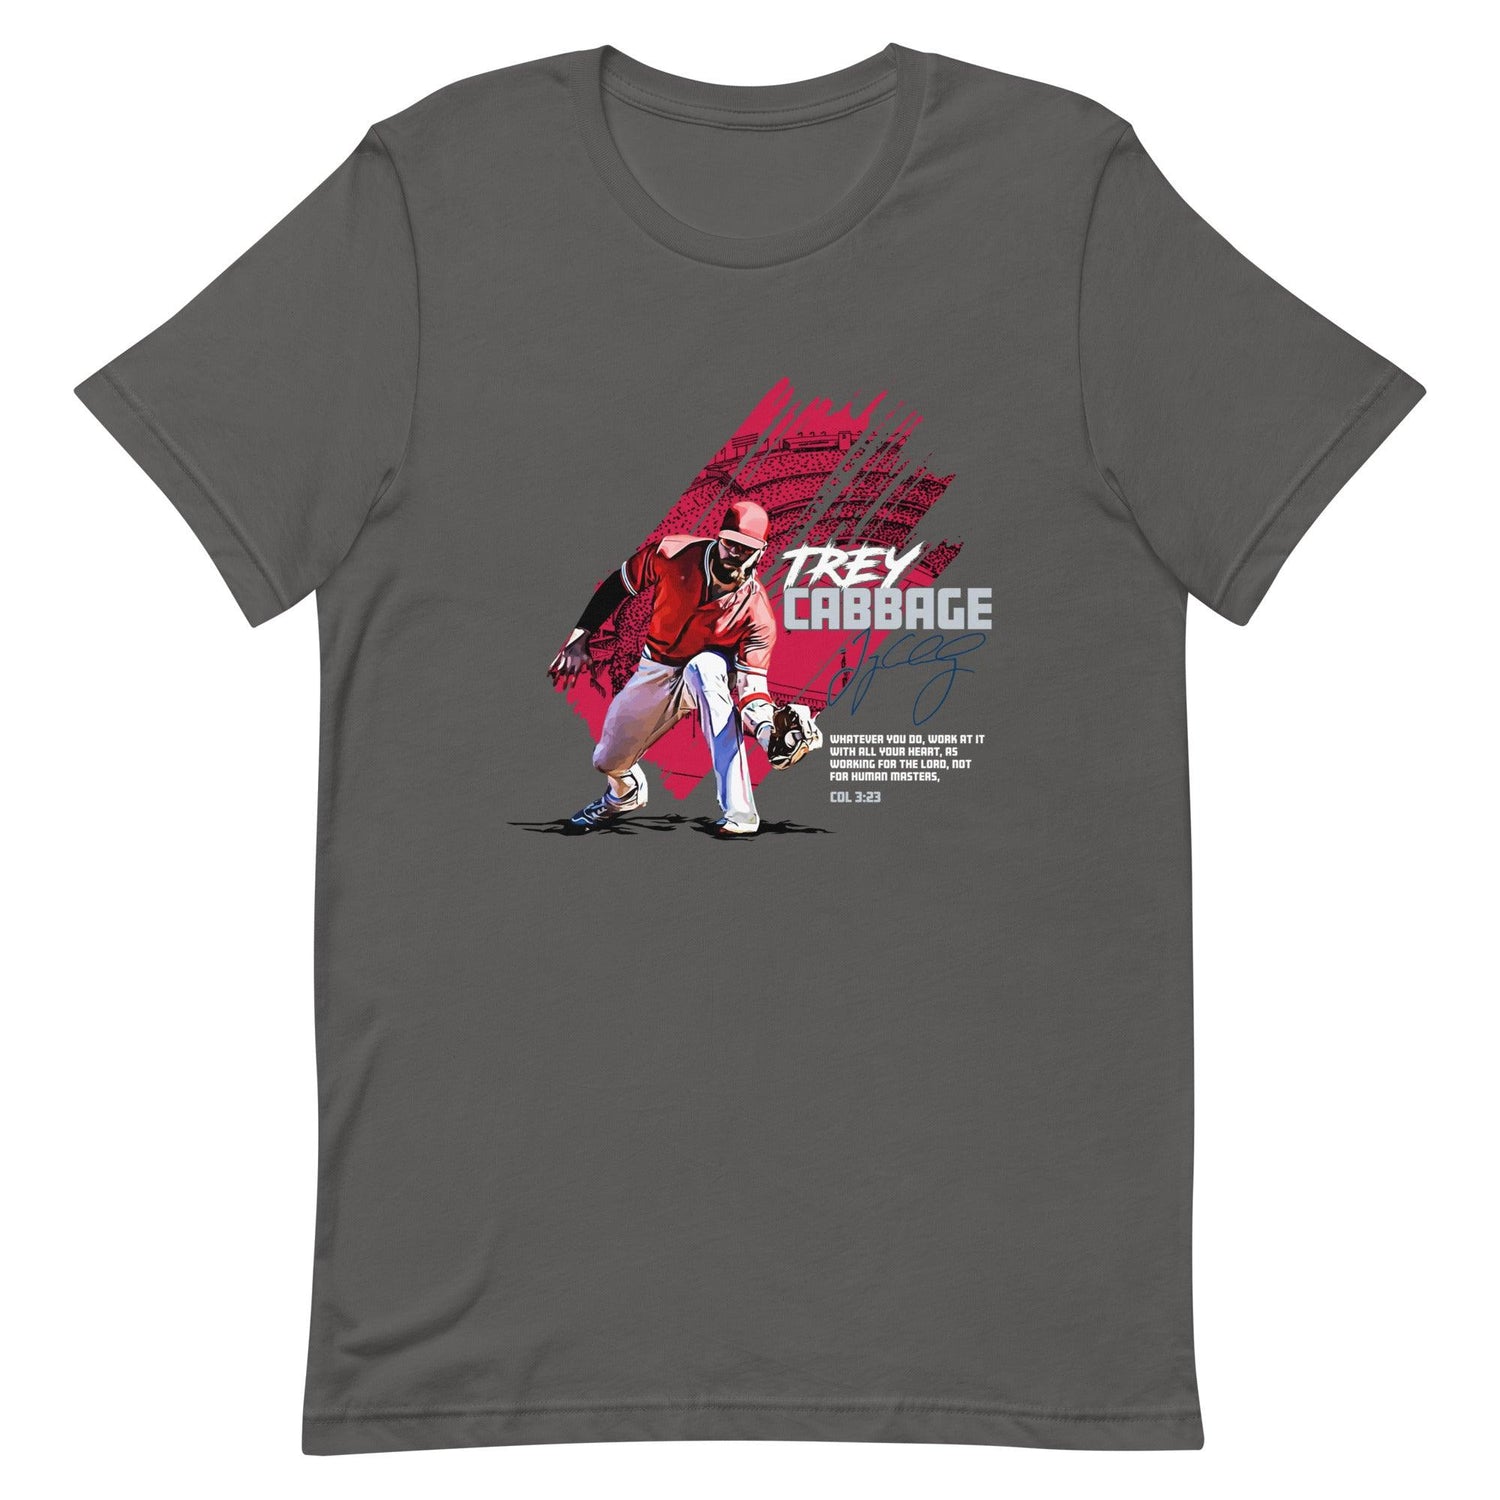 Trey Cabbage “Signature” t-shirt - Fan Arch